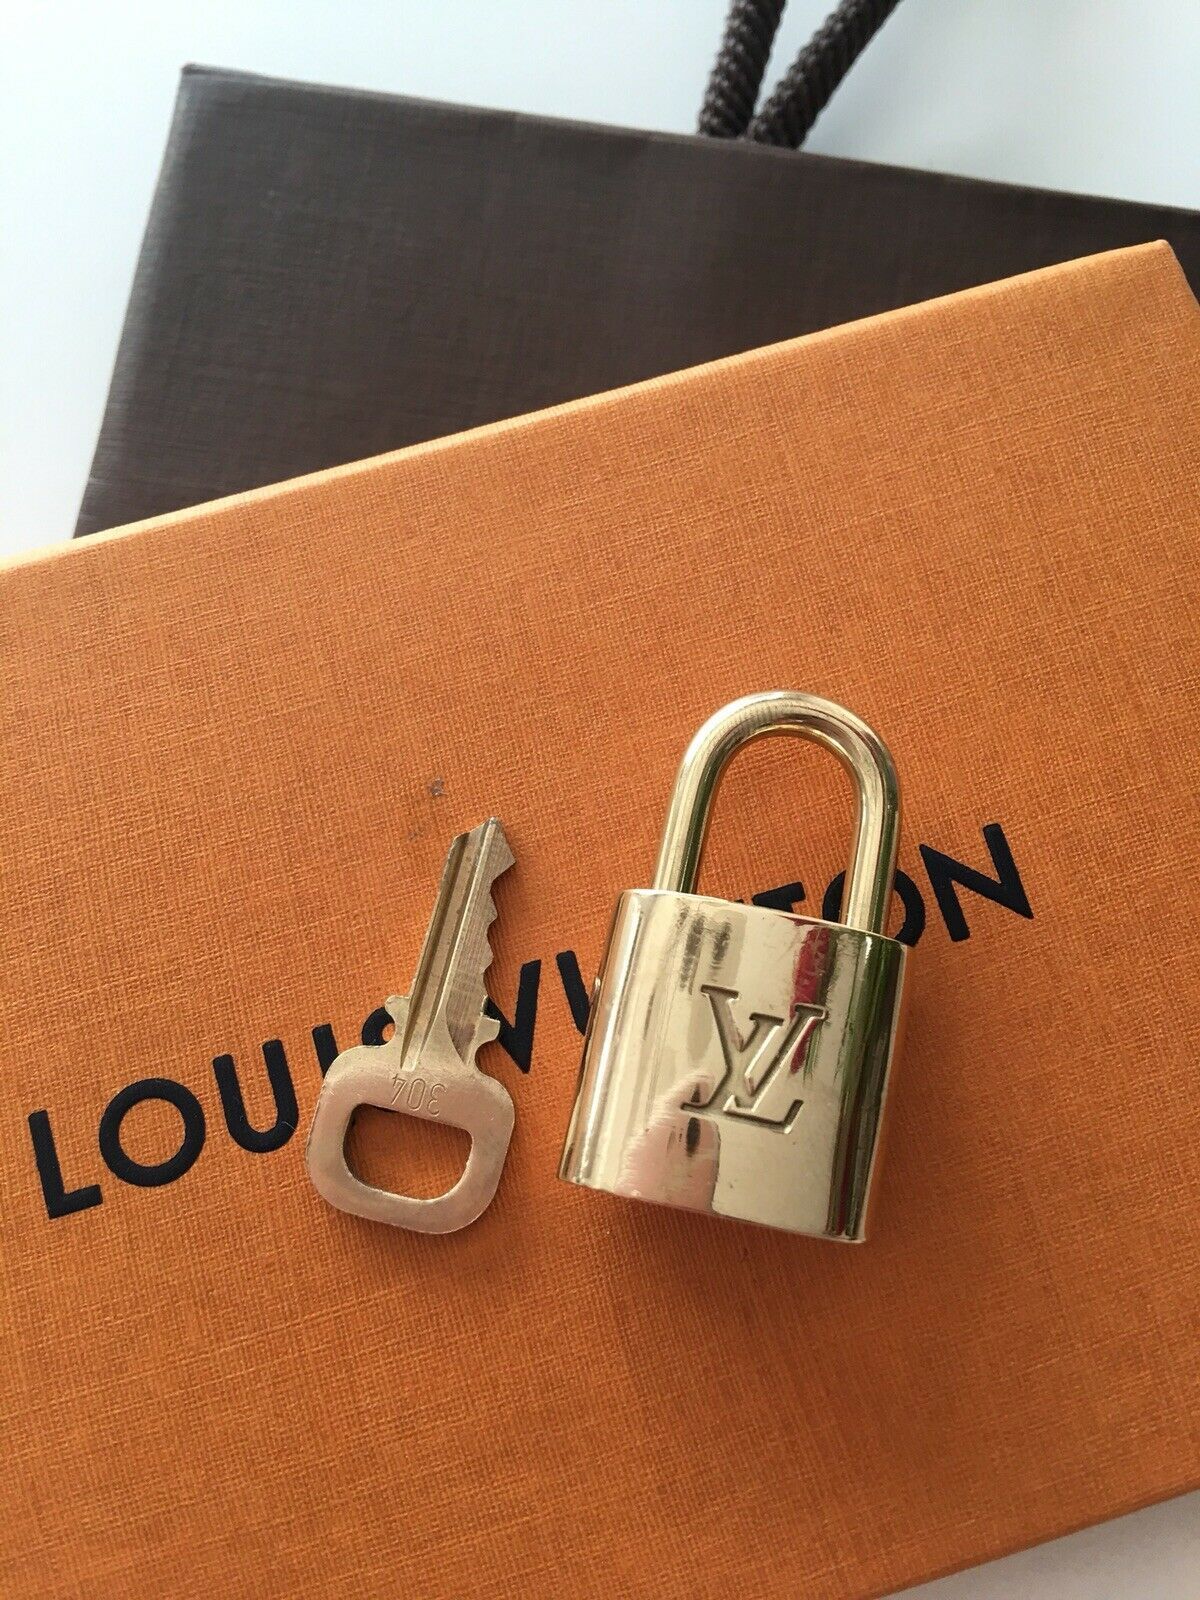 LOUIS VUITTON LOCK & KEY FOR ALL BAGS. PROF POLISHED! LV Drawer Gift Box & Bag! - Handbag ...